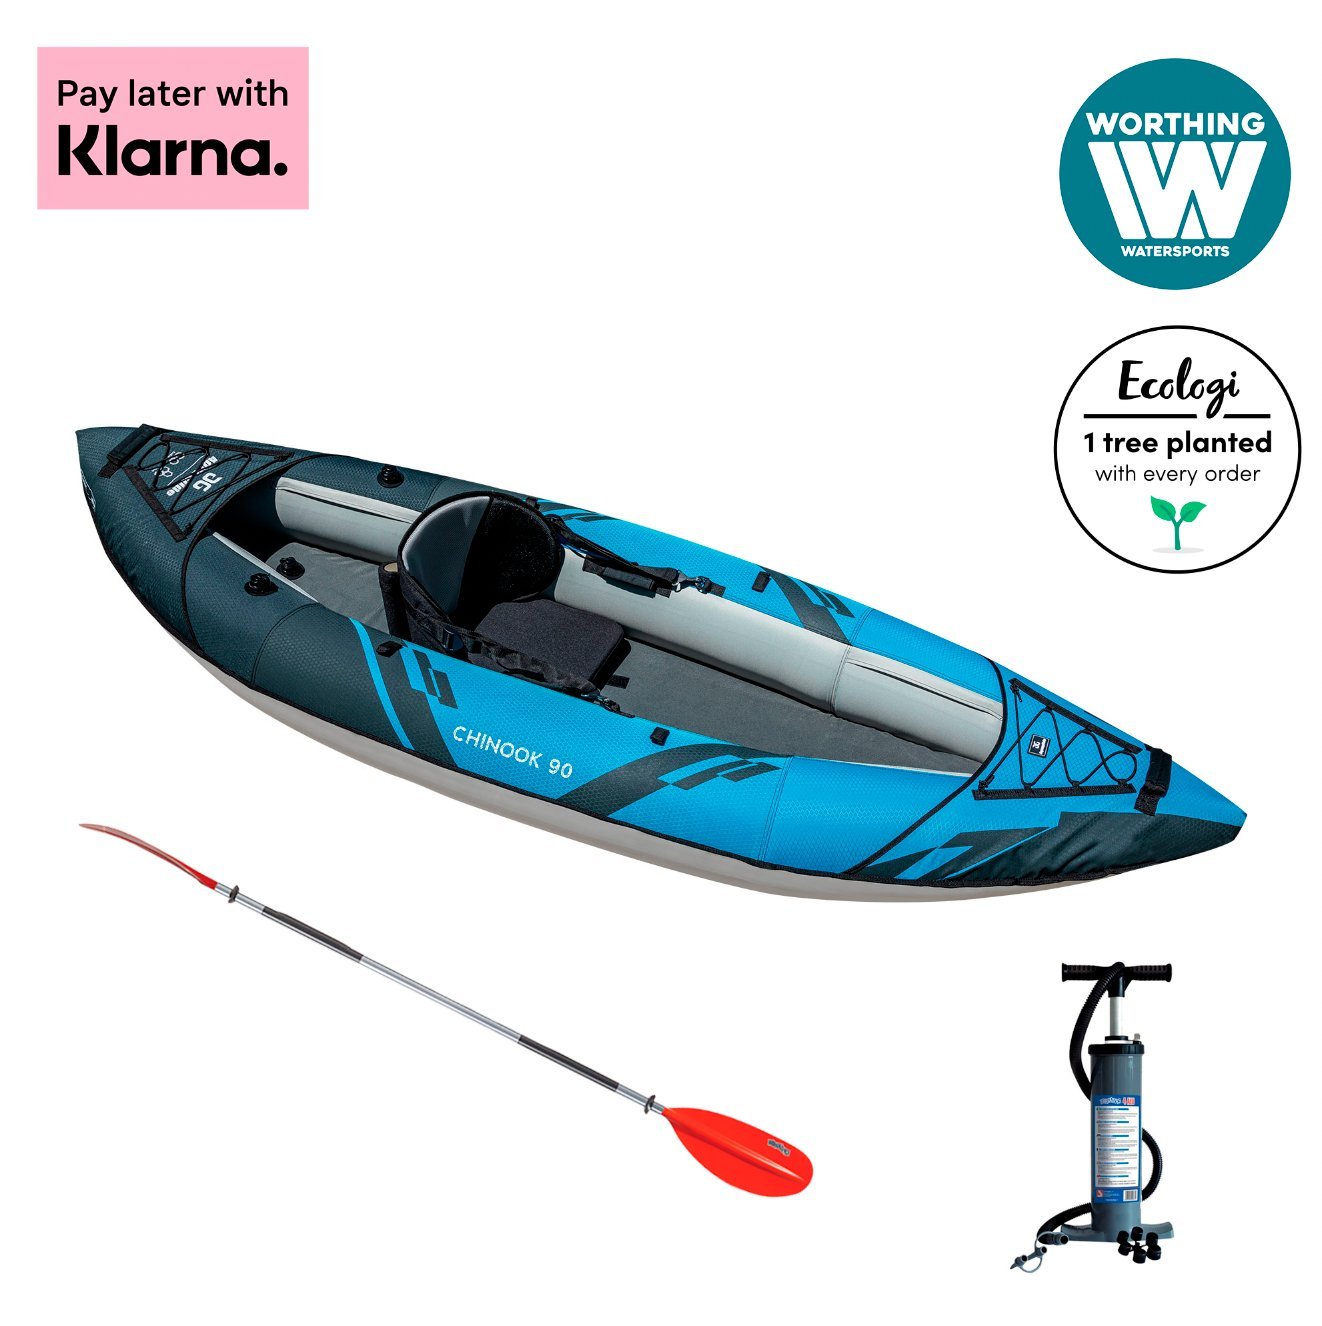 Aquaglide Chinook 90 Package inc Paddle and Pump - Worthing Watersports - Kayaks - Aquaglide